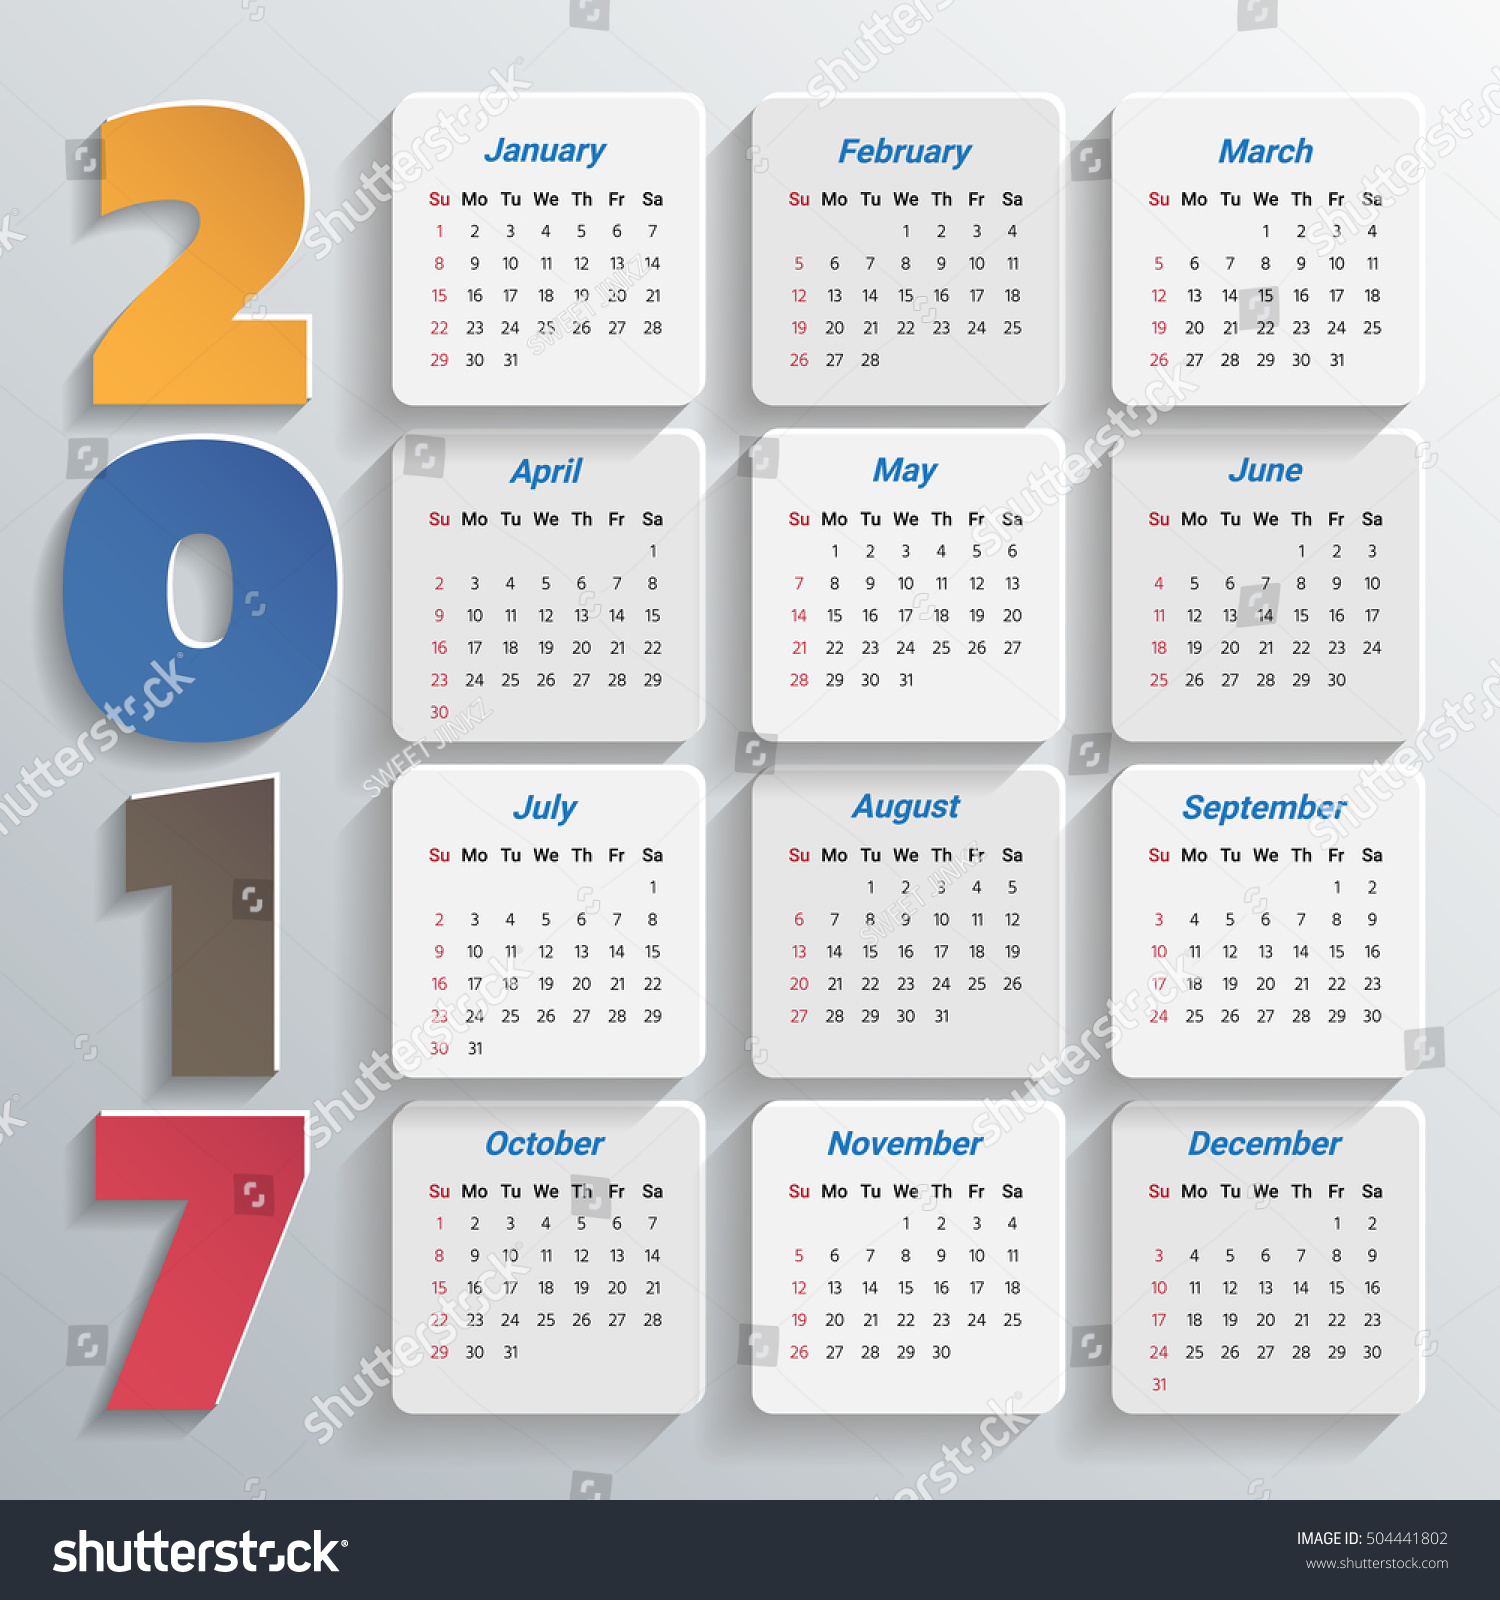 2017 Modern Calendar Template Vectorillustration: เวกเตอร์สต็อก (ปลอด